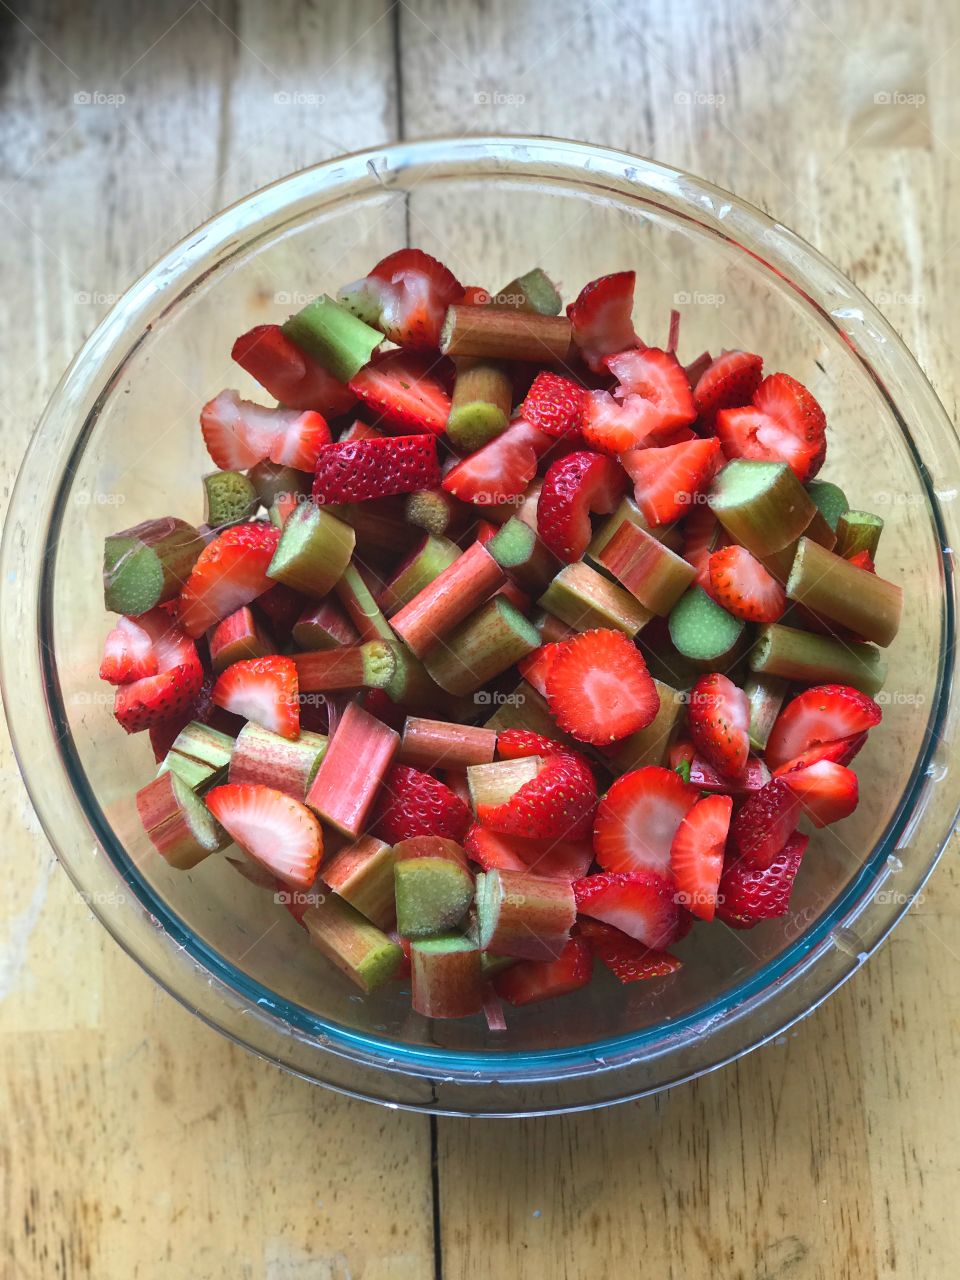 Rhubarb and strawberries 